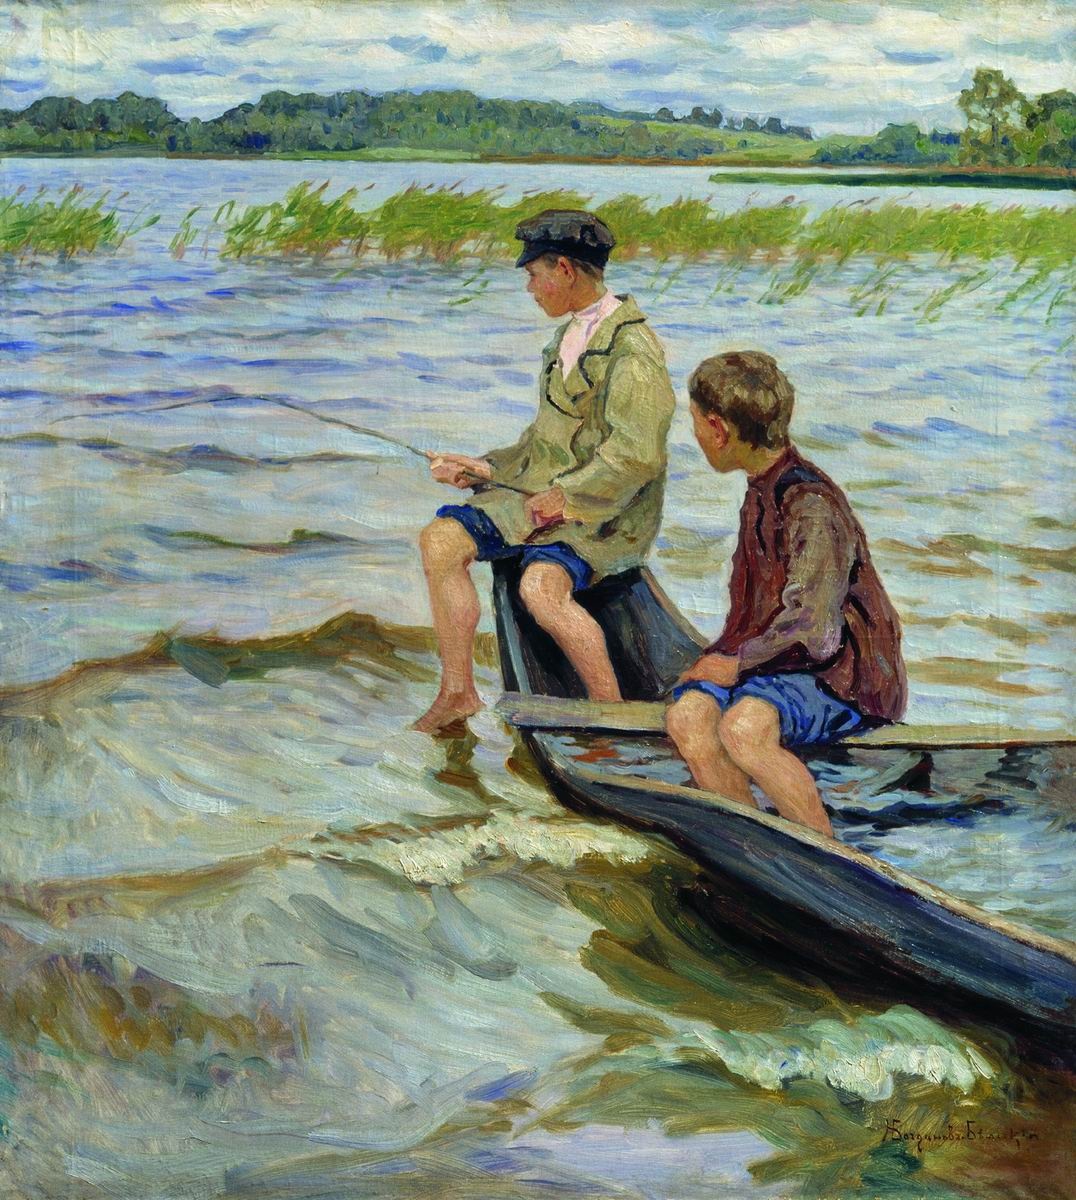 Мальчик ловил рыбу на реке. Ю П Казаков тихое утро.